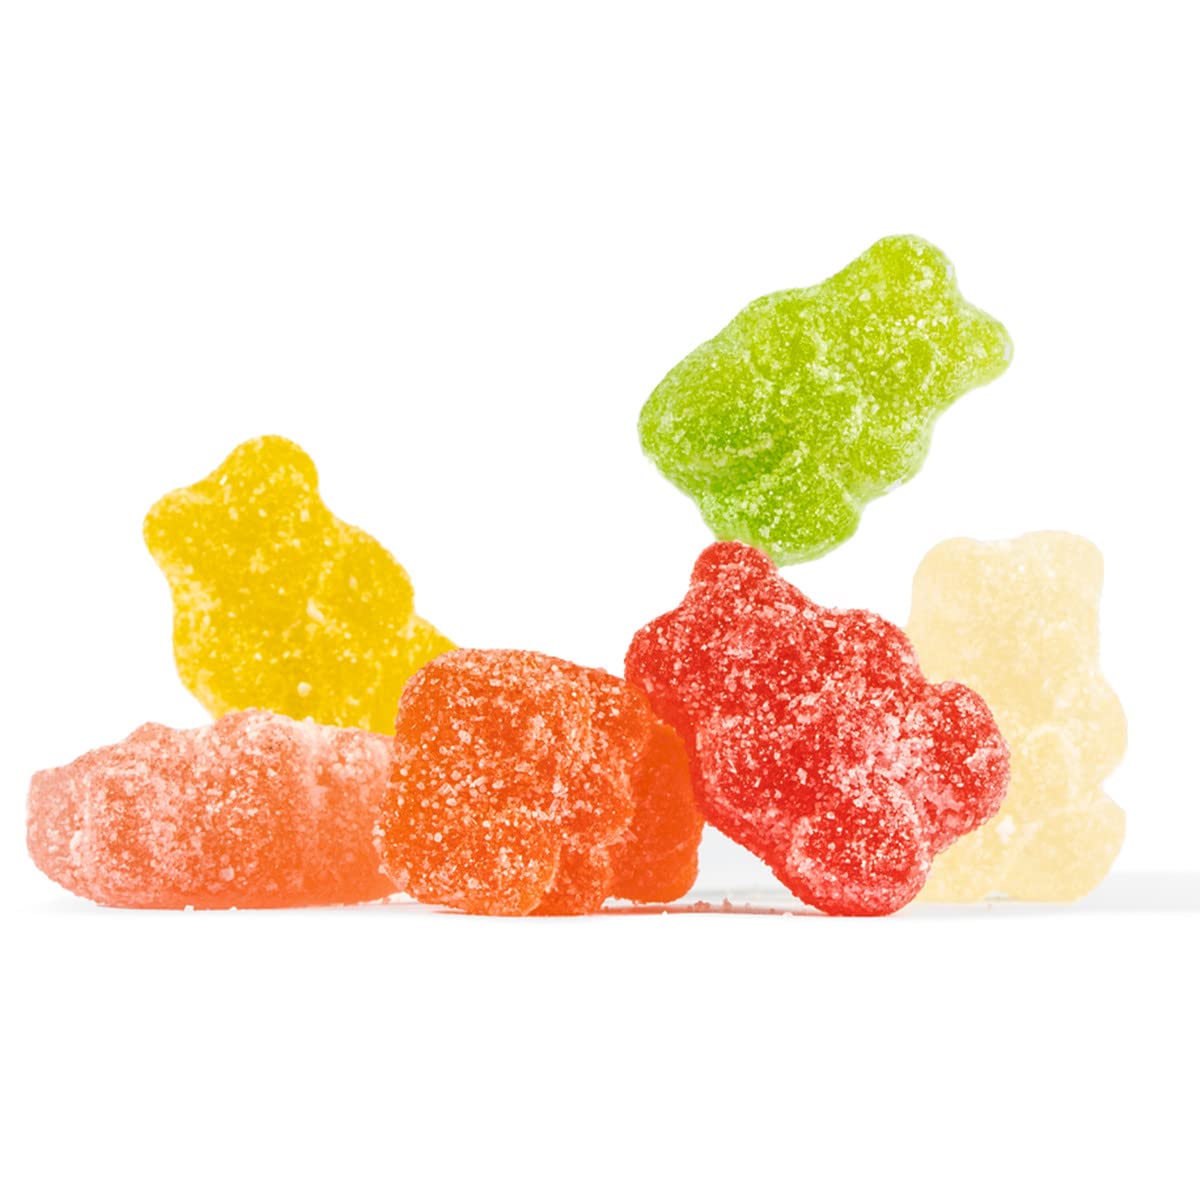 Sour Gummi Bears